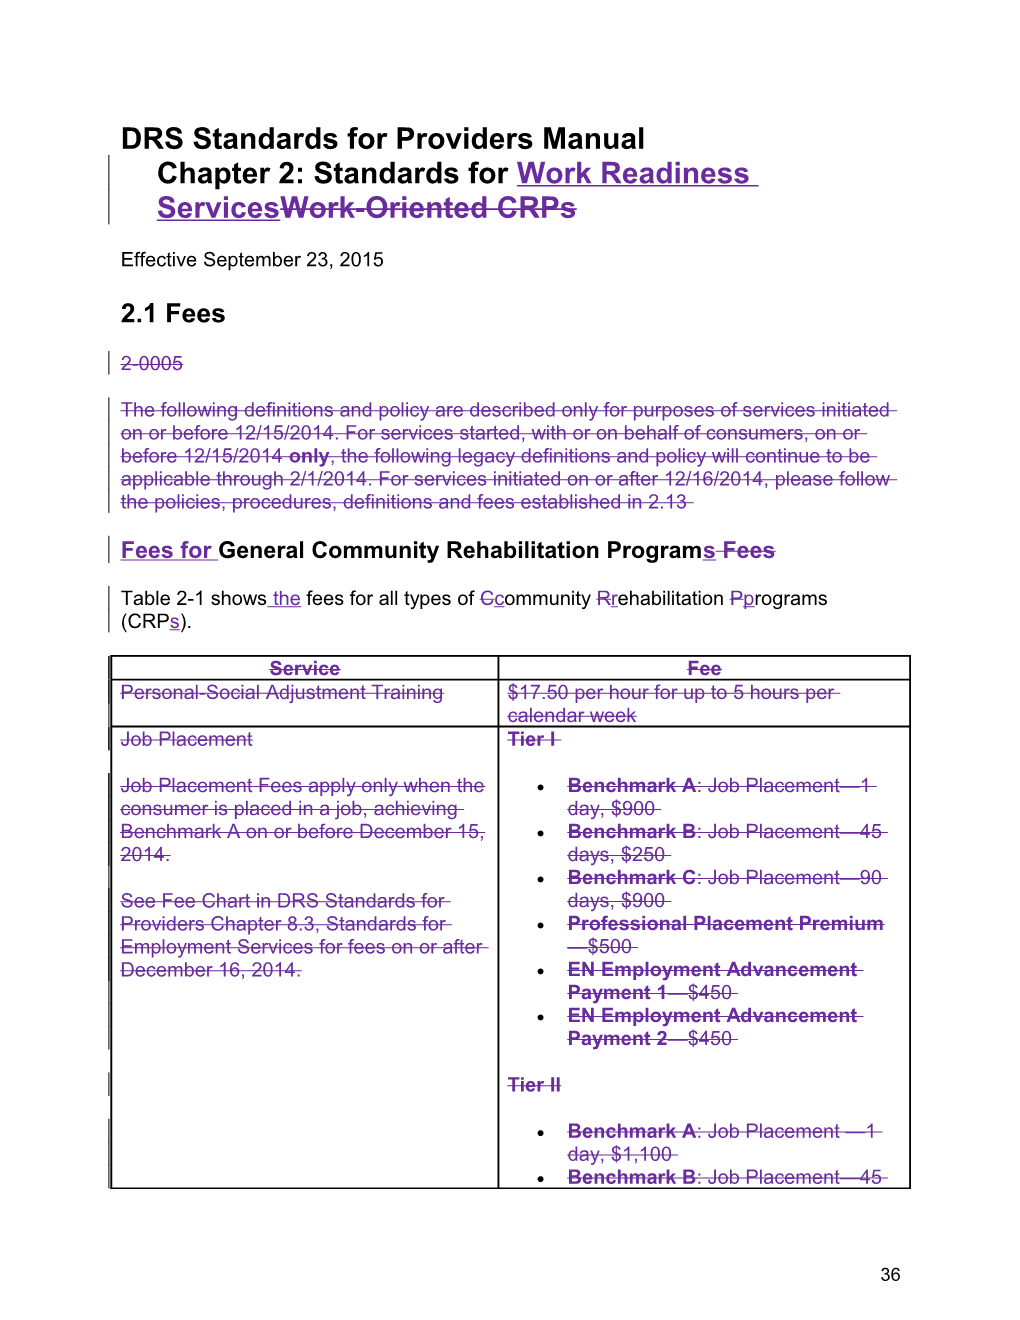 DRS Standards for Providers Chapter 2, Revised September 23, 2015